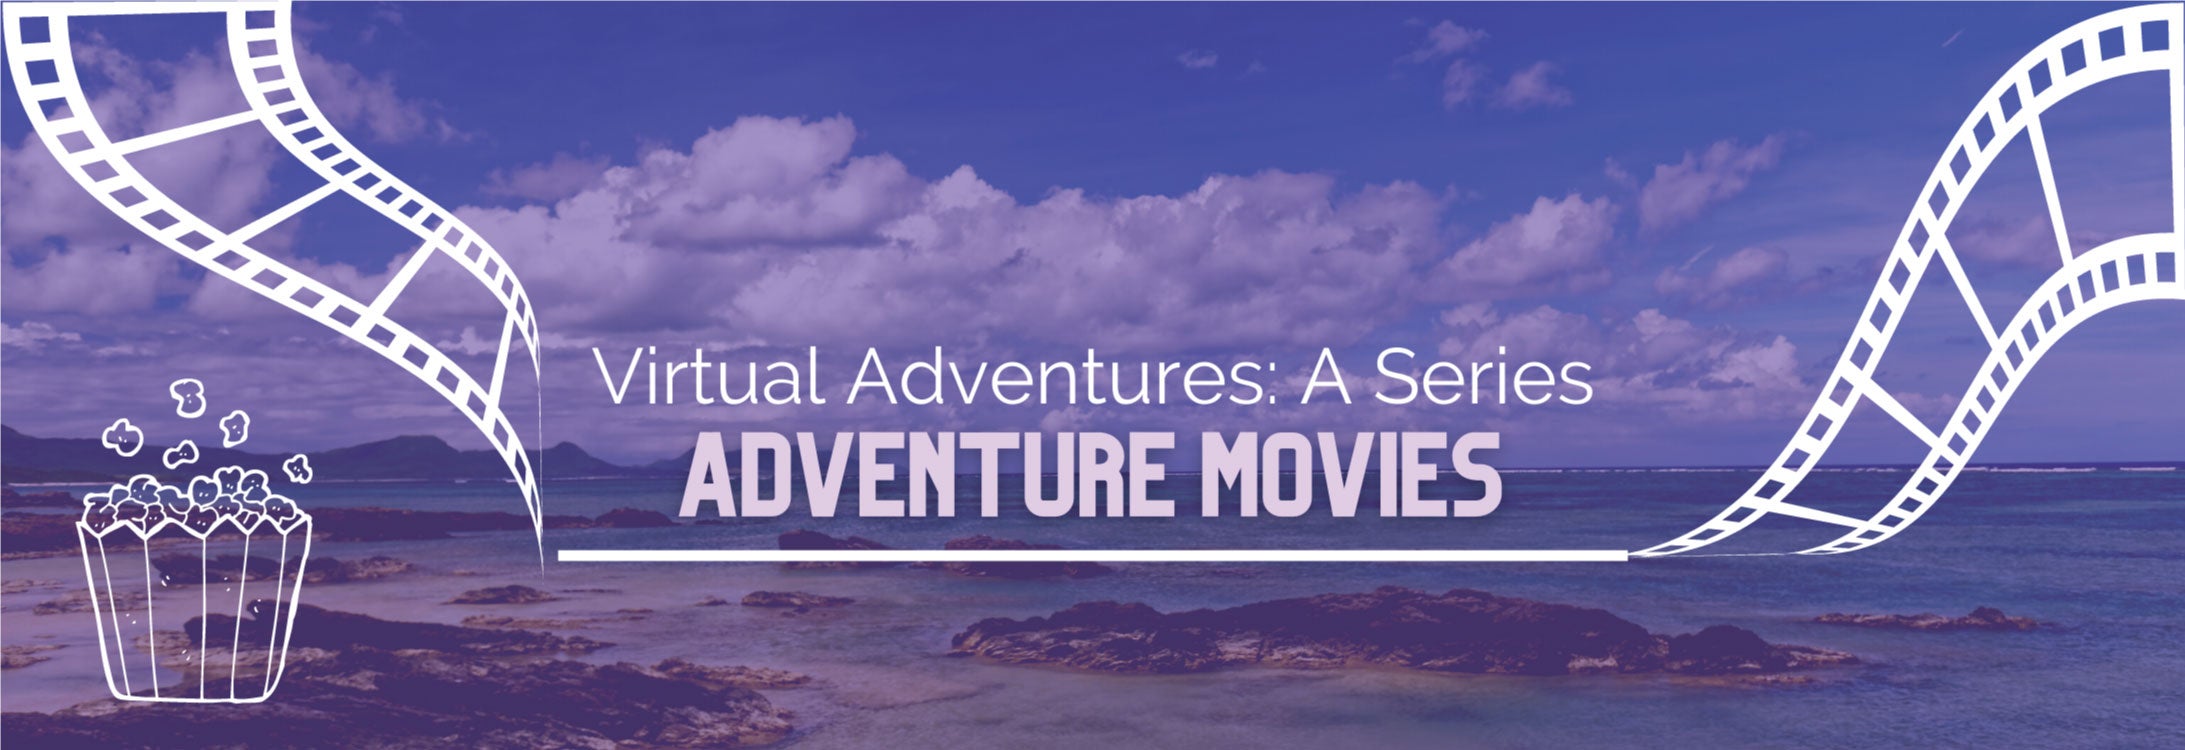 Virtual Adventures: A Series cover